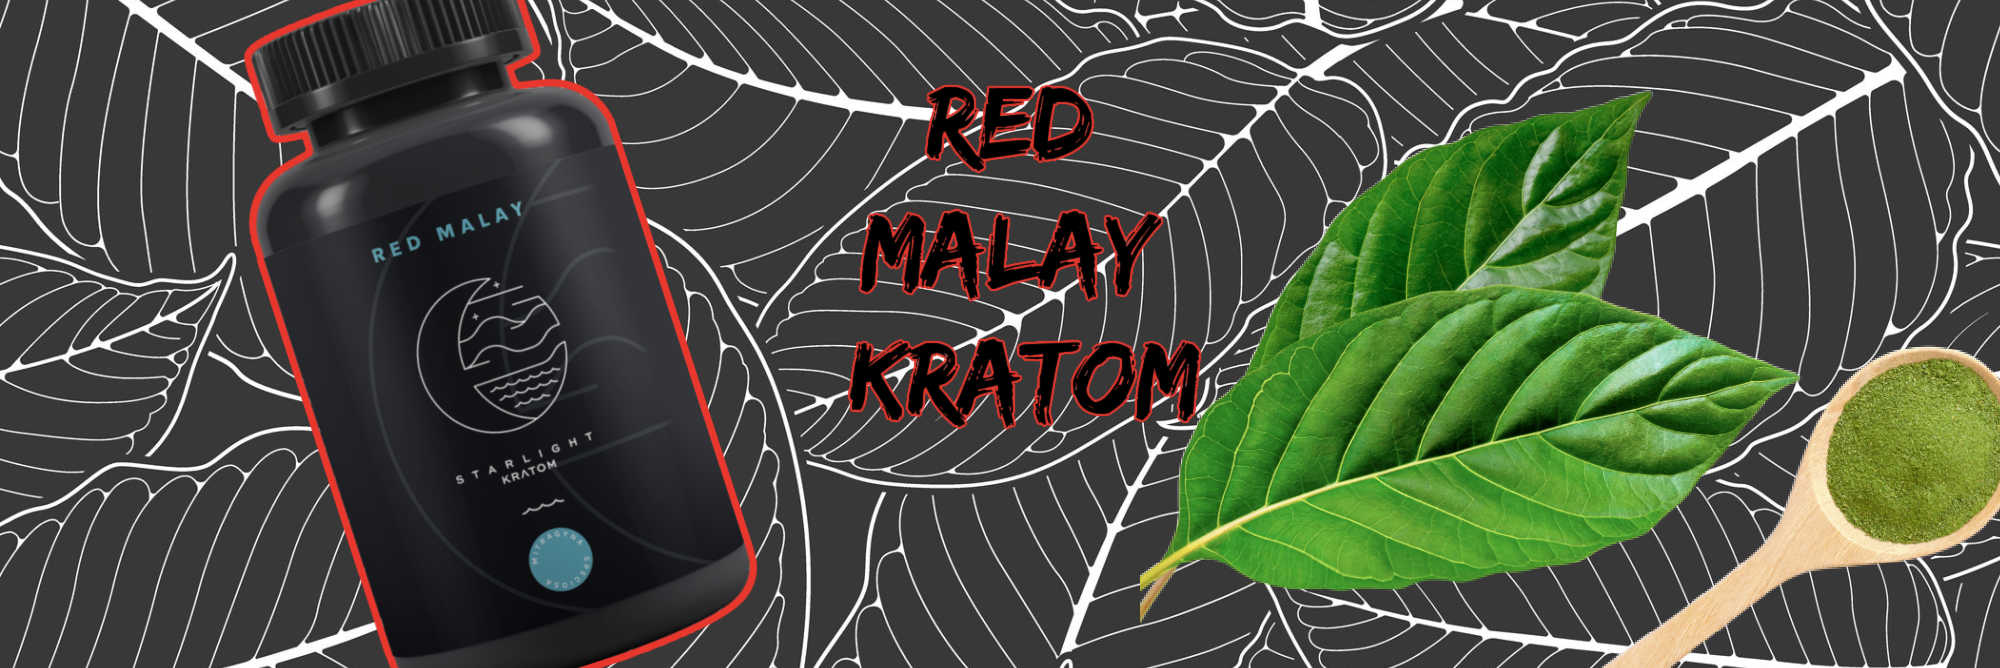 image of red malay kratom